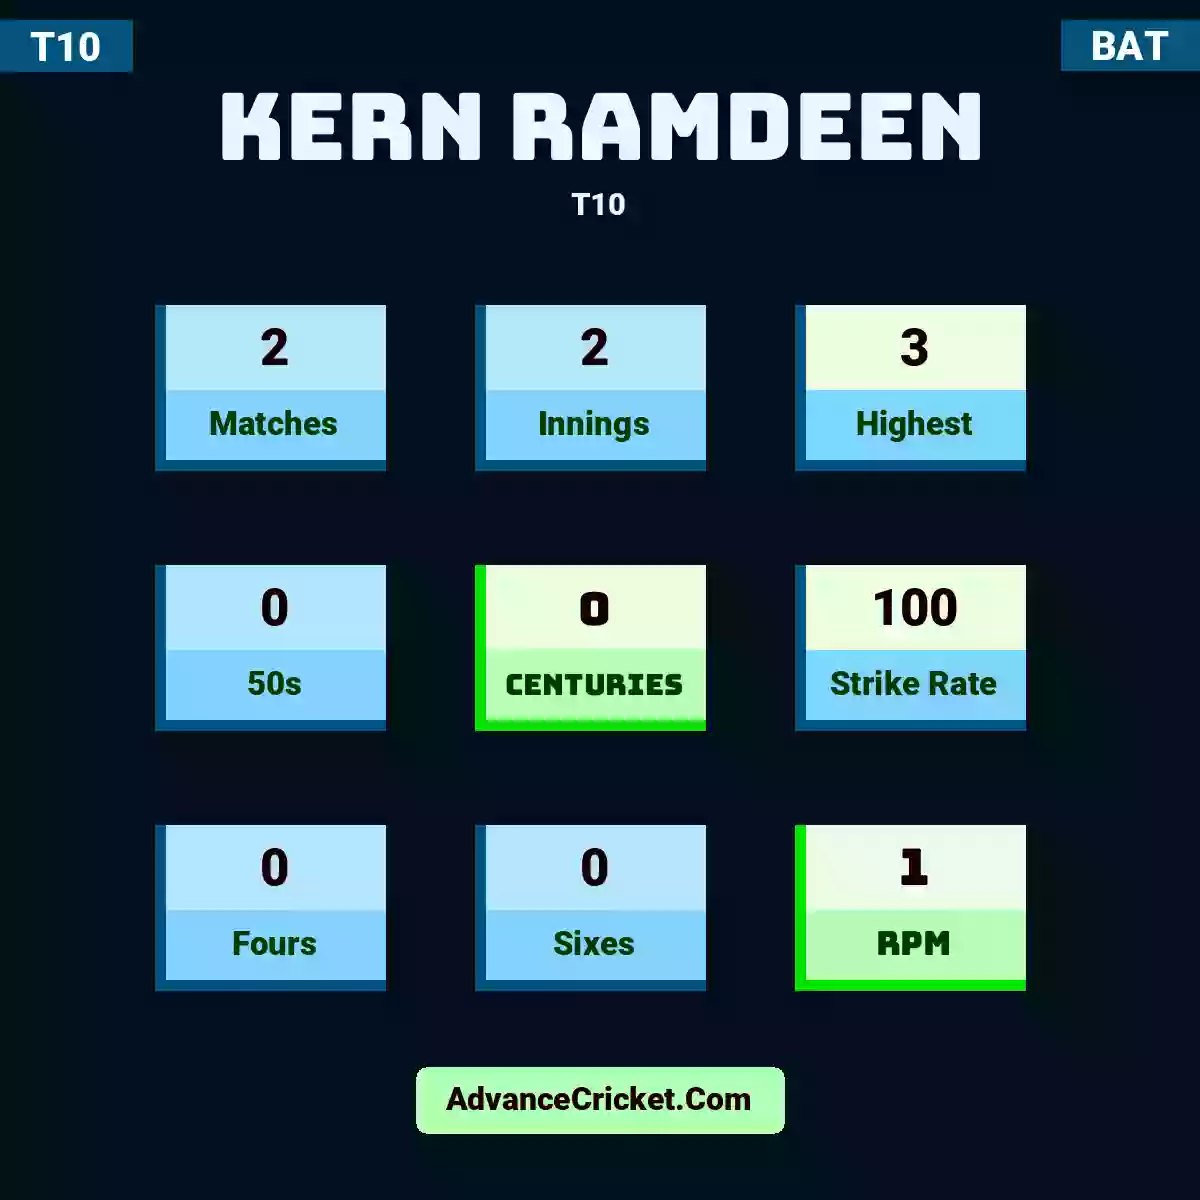 Kern Ramdeen T10 , Kern Ramdeen played 2 matches, scored 3 runs as highest, 0 half-centuries, and 0 centuries, with a strike rate of 100. K.Ramdeen hit 0 fours and 0 sixes, with an RPM of 1.